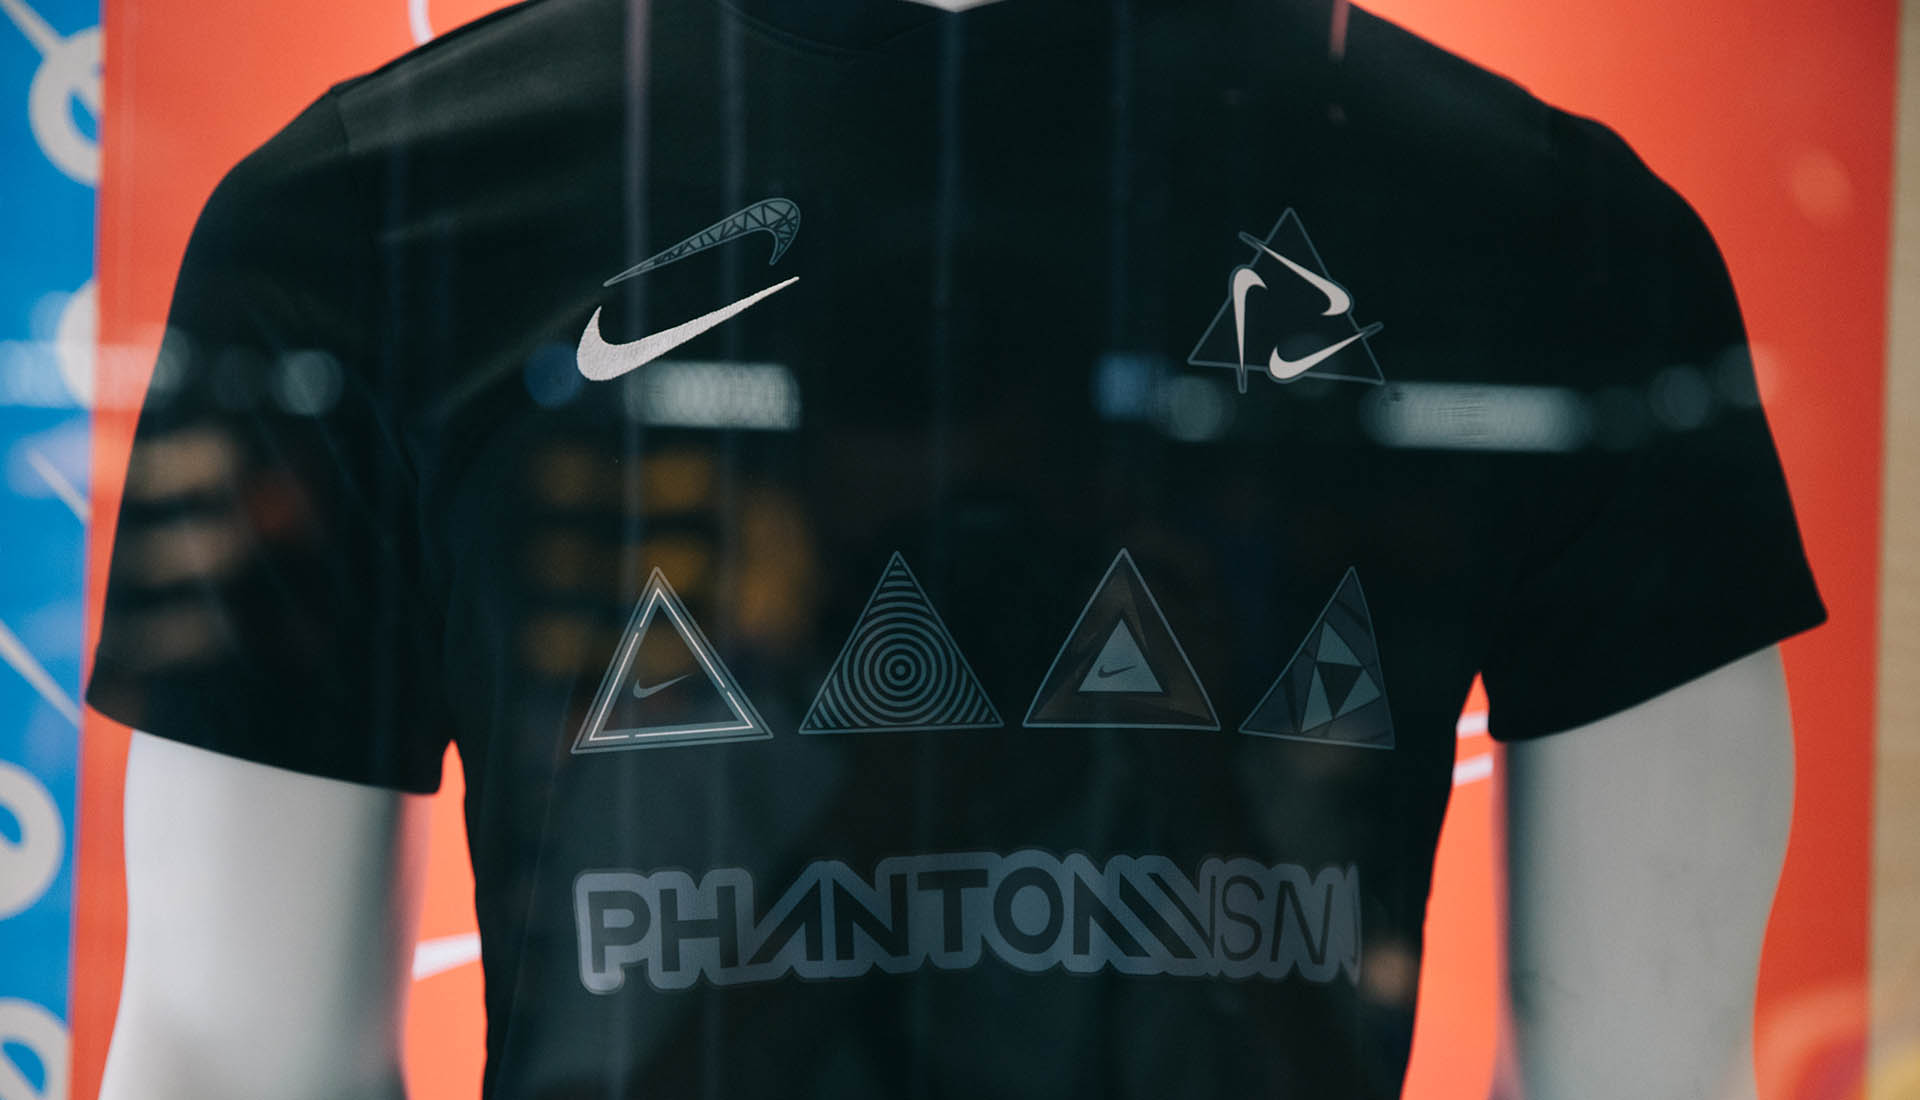 Phantom Tournament Nike Intros_0020_nike_SB-23.jpg